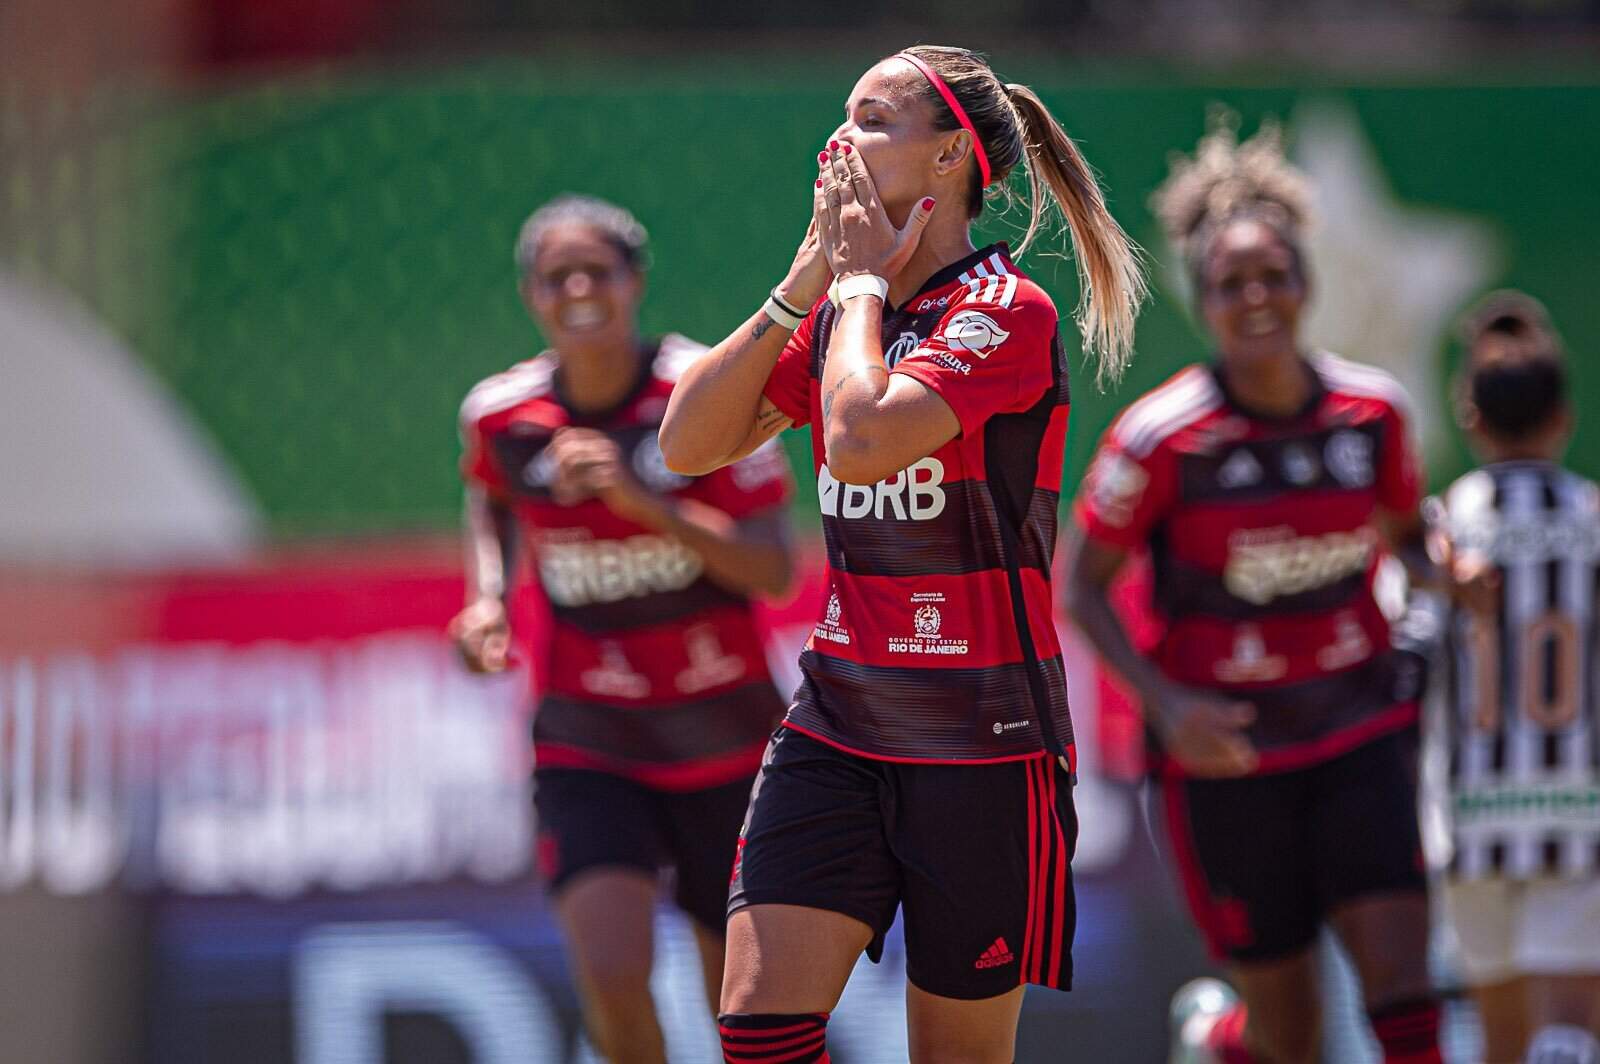 Corinthians goleia Flamengo e conquista bicampeonato da Supercopa feminina  - Superesportes